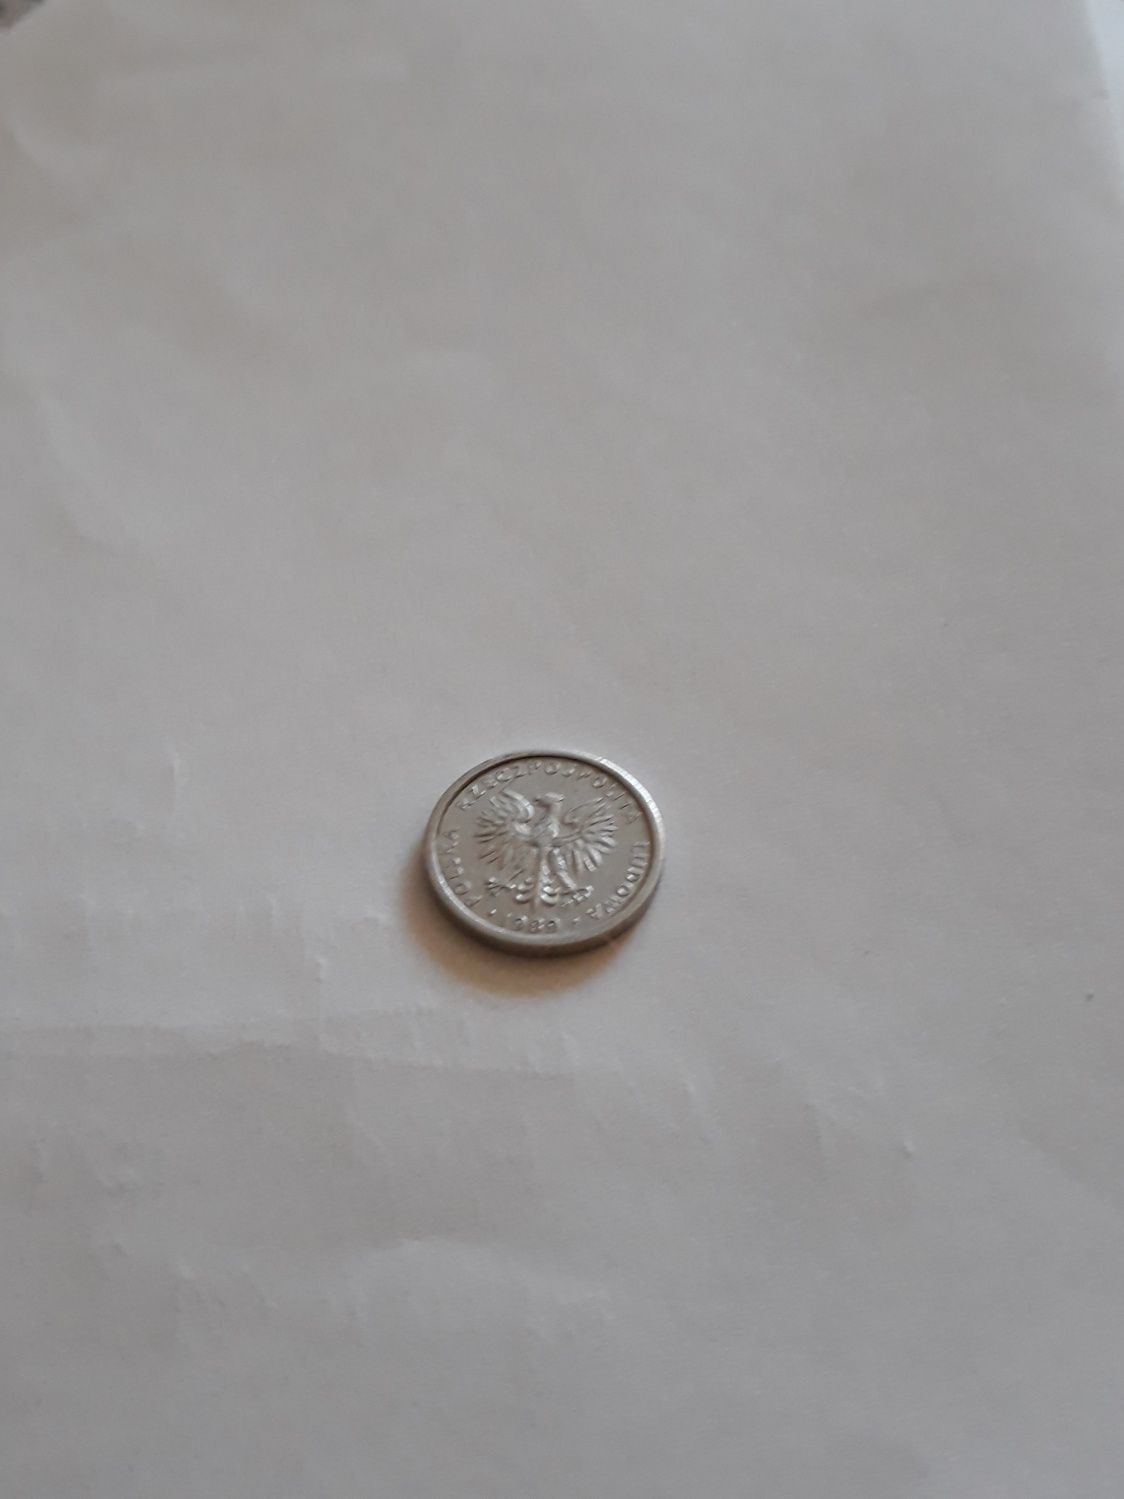 Moneta 1 zł 1989r -średnica 16 mm